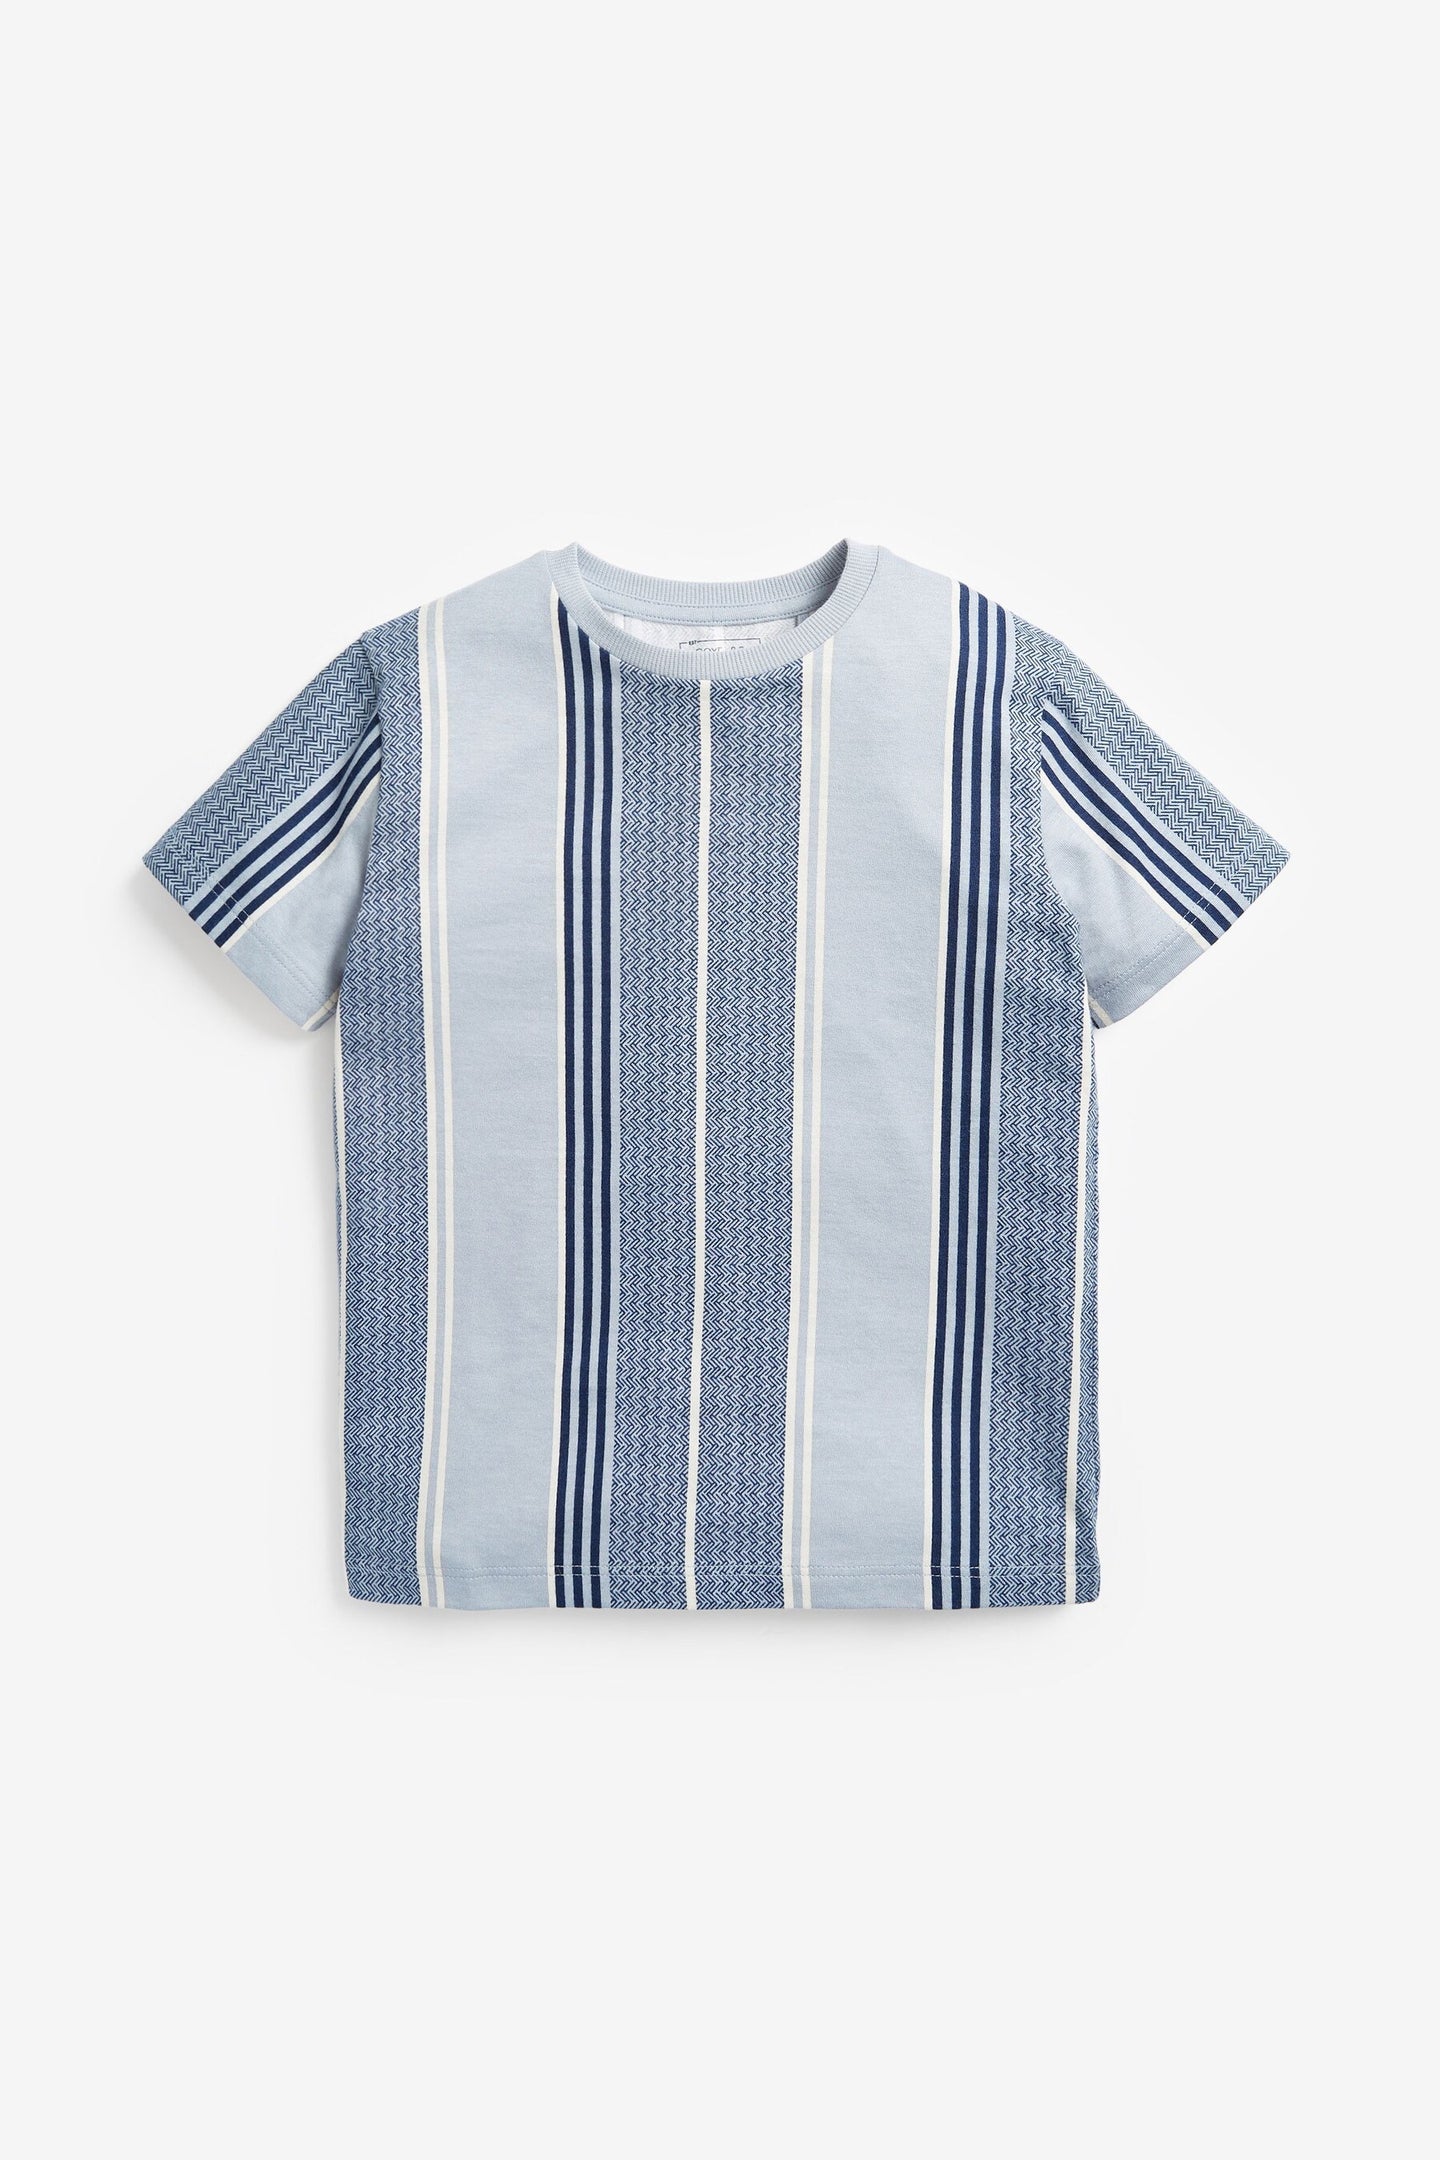 Blue Heritage Vertical Stripe Short Sleeve Jersey T-Shirt (3-12yrs) - Allsport